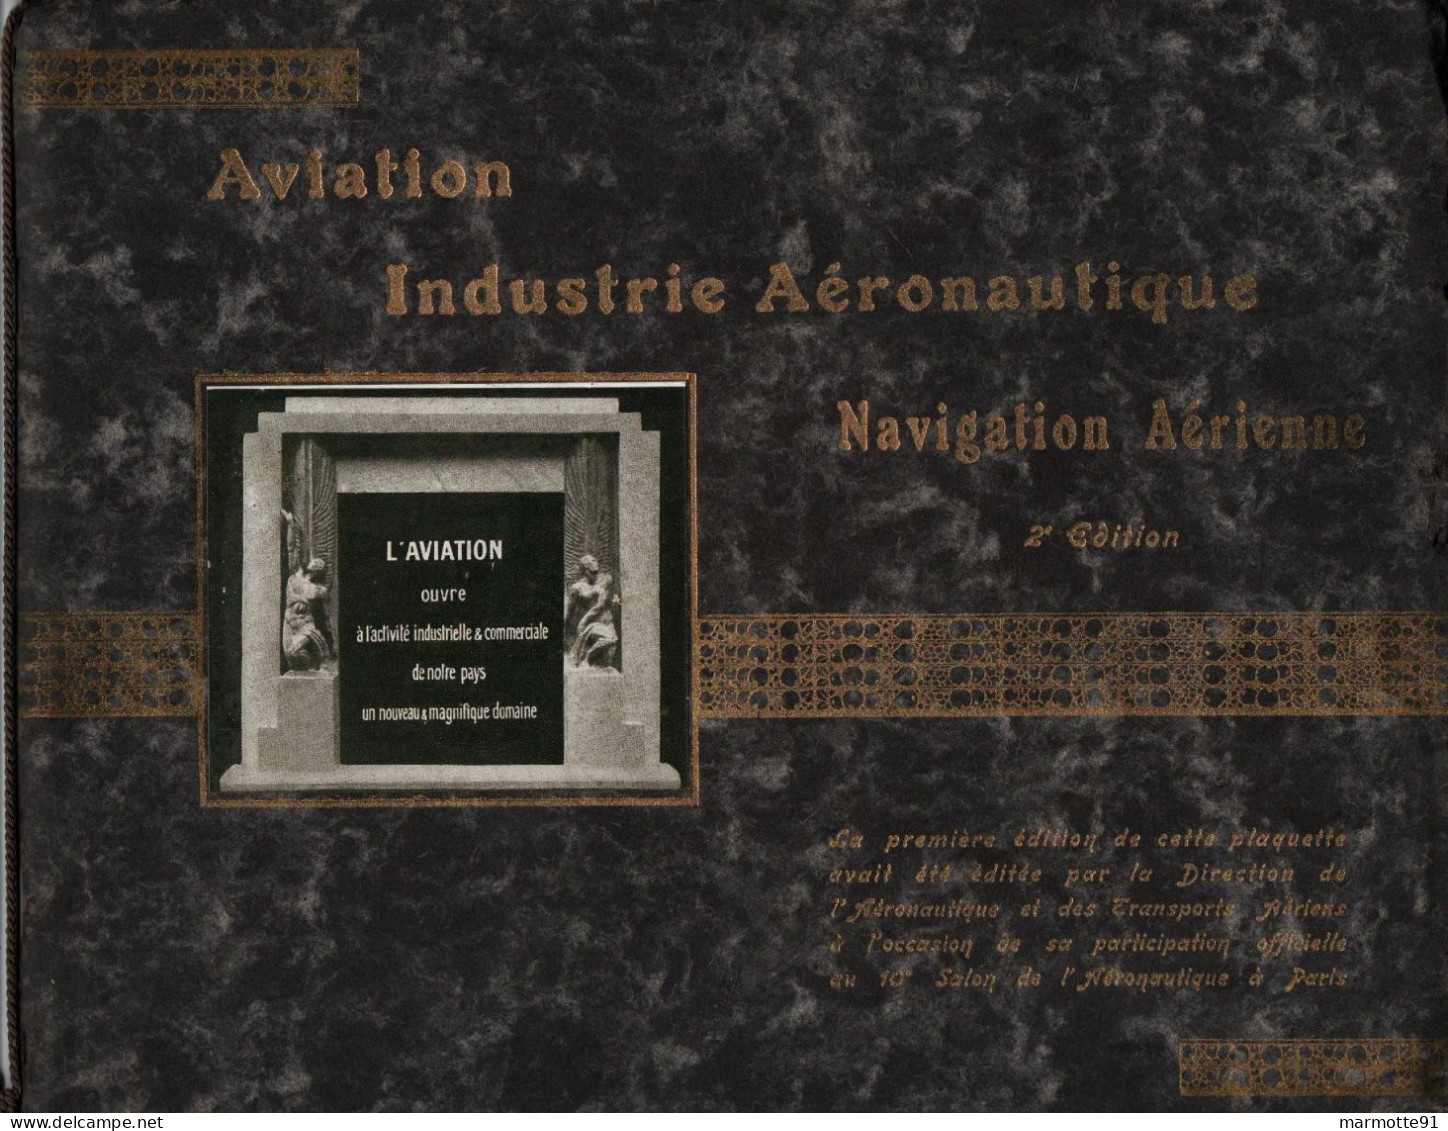 AVIATION INDUSTRIE AERONAUTIQUE NAVIGATION AERIENNE 2e EDITION  10e SALON AERONAUTIQUE PARIS - Vliegtuig